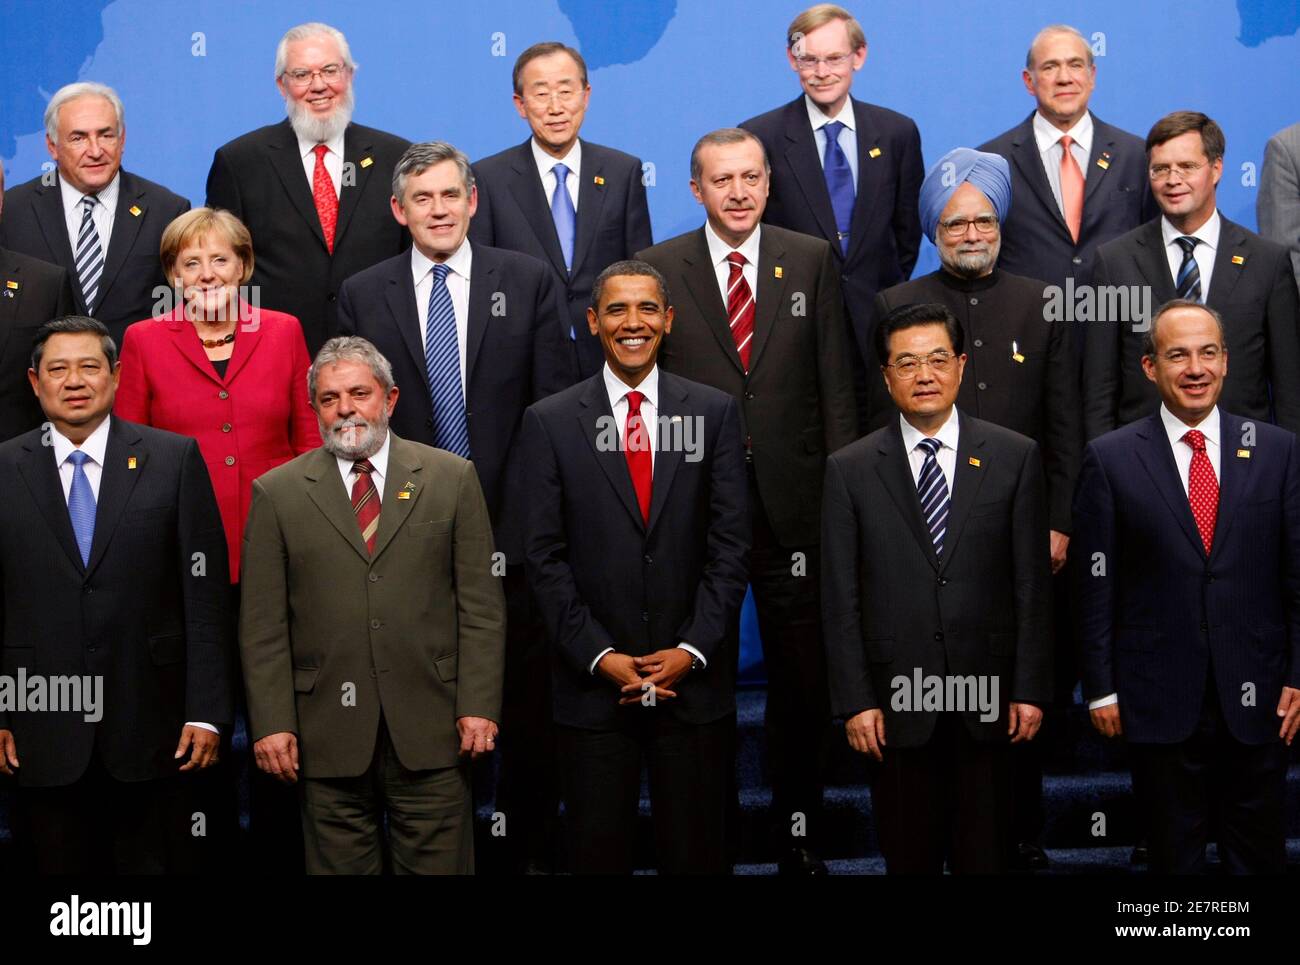 G20 leaders gather for a group photo at the G20 Summit in Pittsburgh,  Pennsylvania, September 25, 2009. Front row, L-R: Indonesia's President  Susilo Bambang Yudhoyono, Brazil's President Luiz Inacio Lula da Silva,